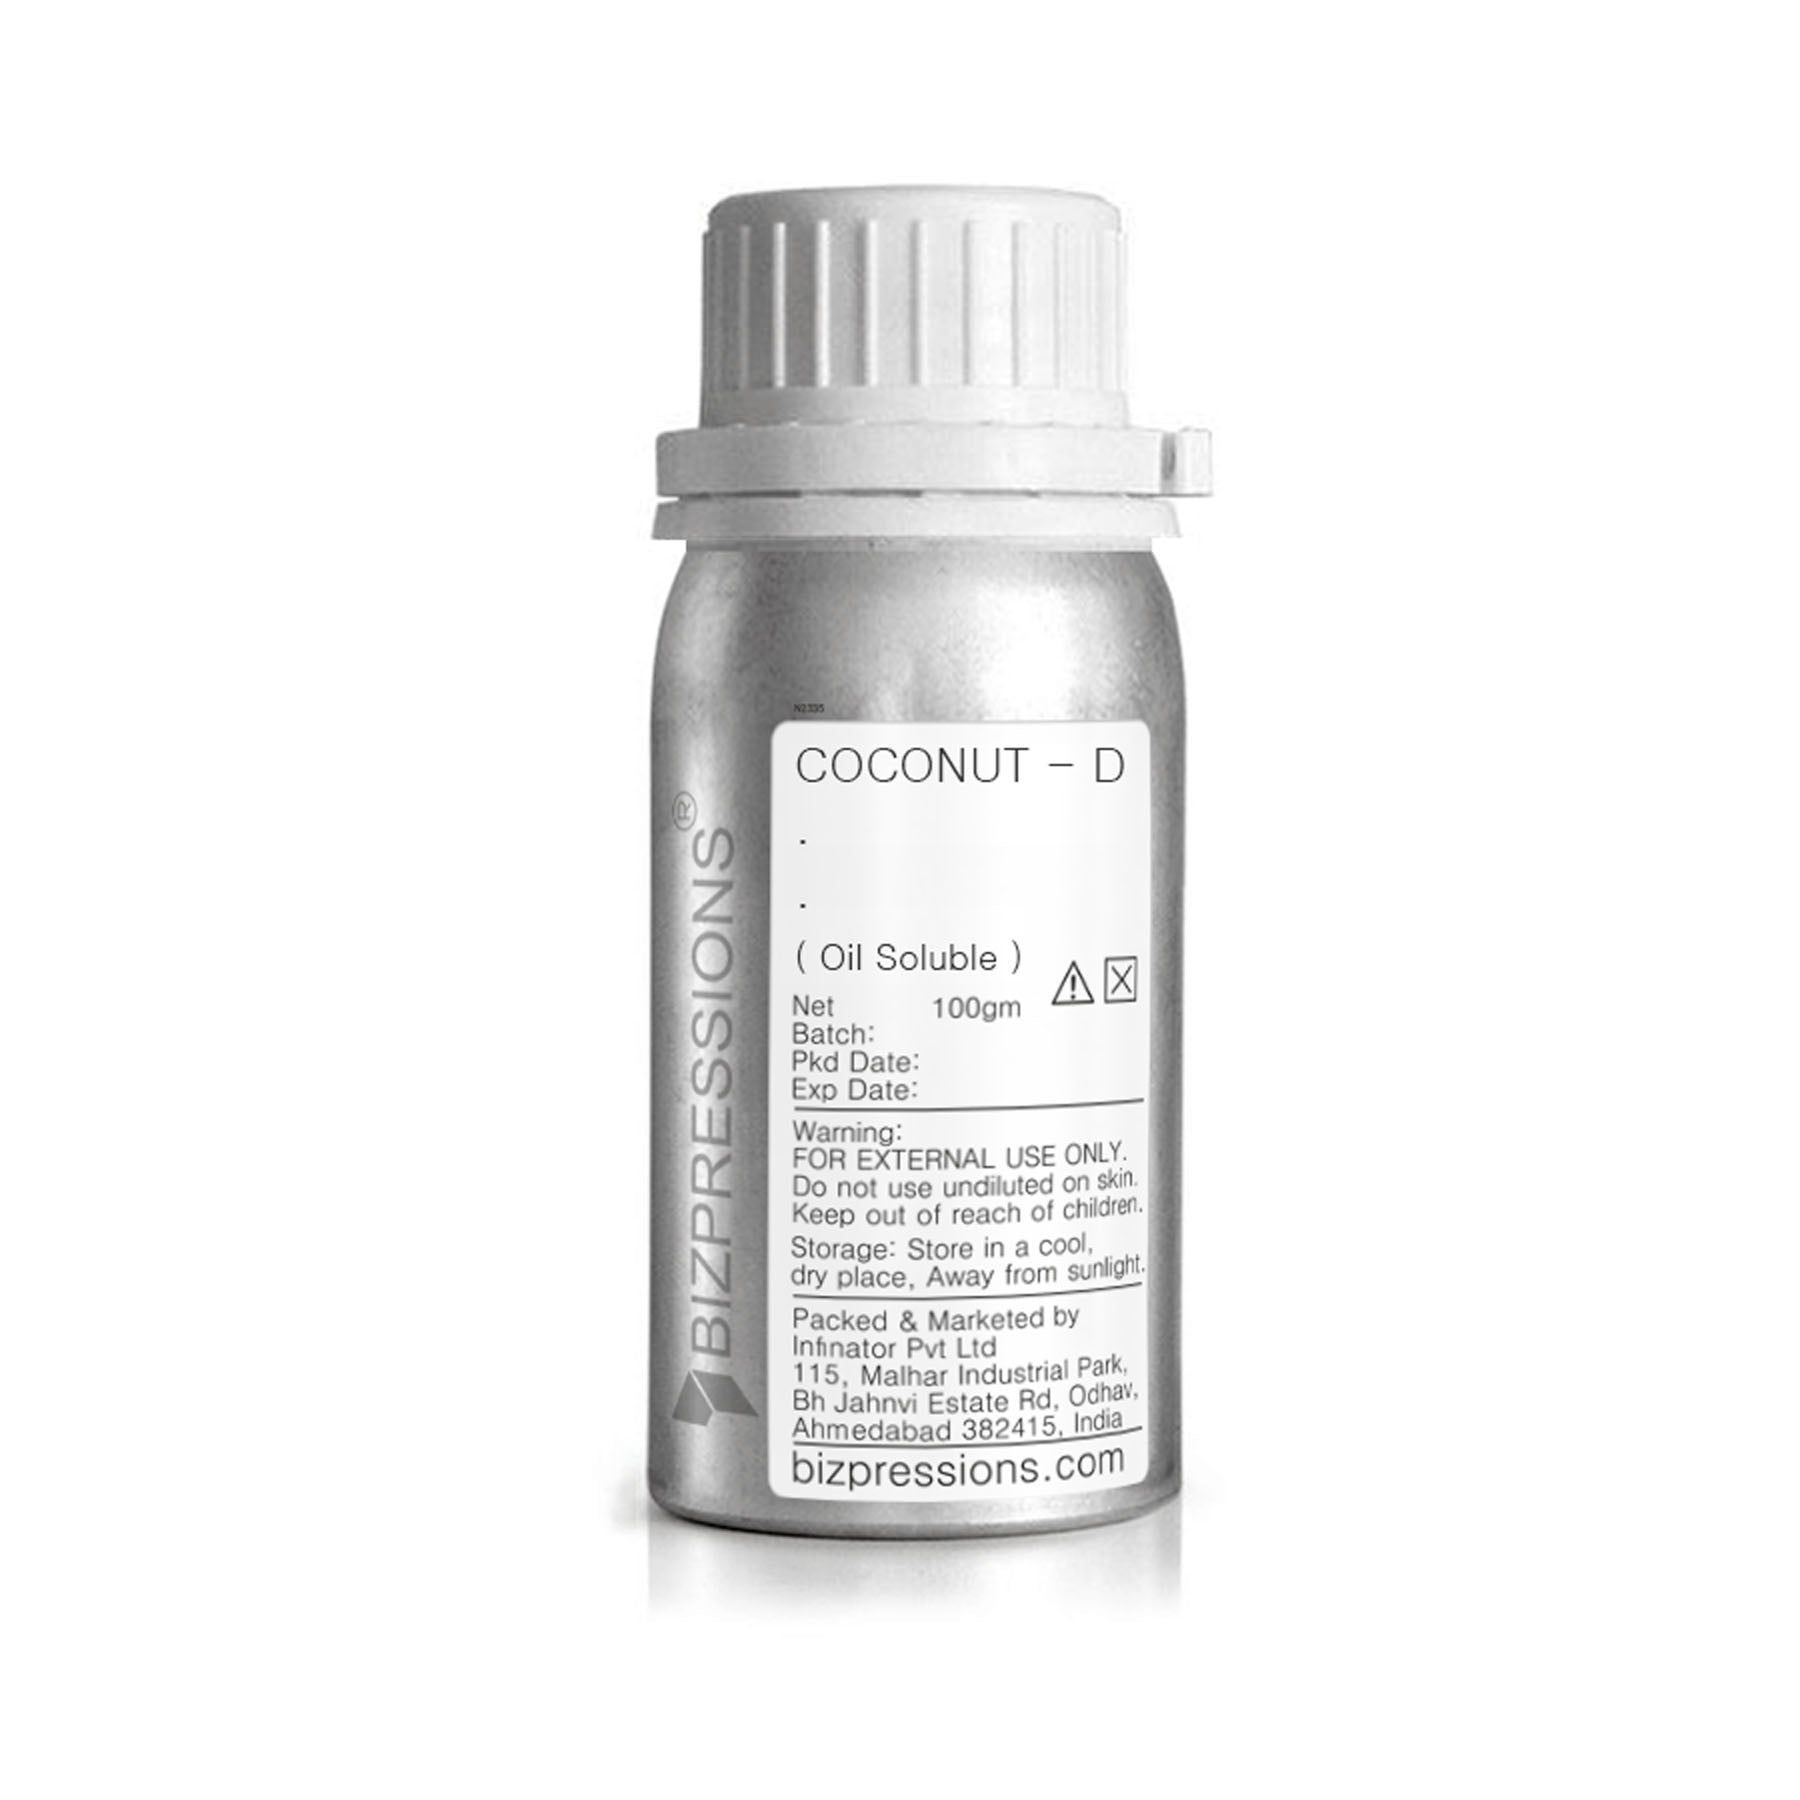 COCONUT - D - Fragrance ( Oil Soluble ) - 100 gm